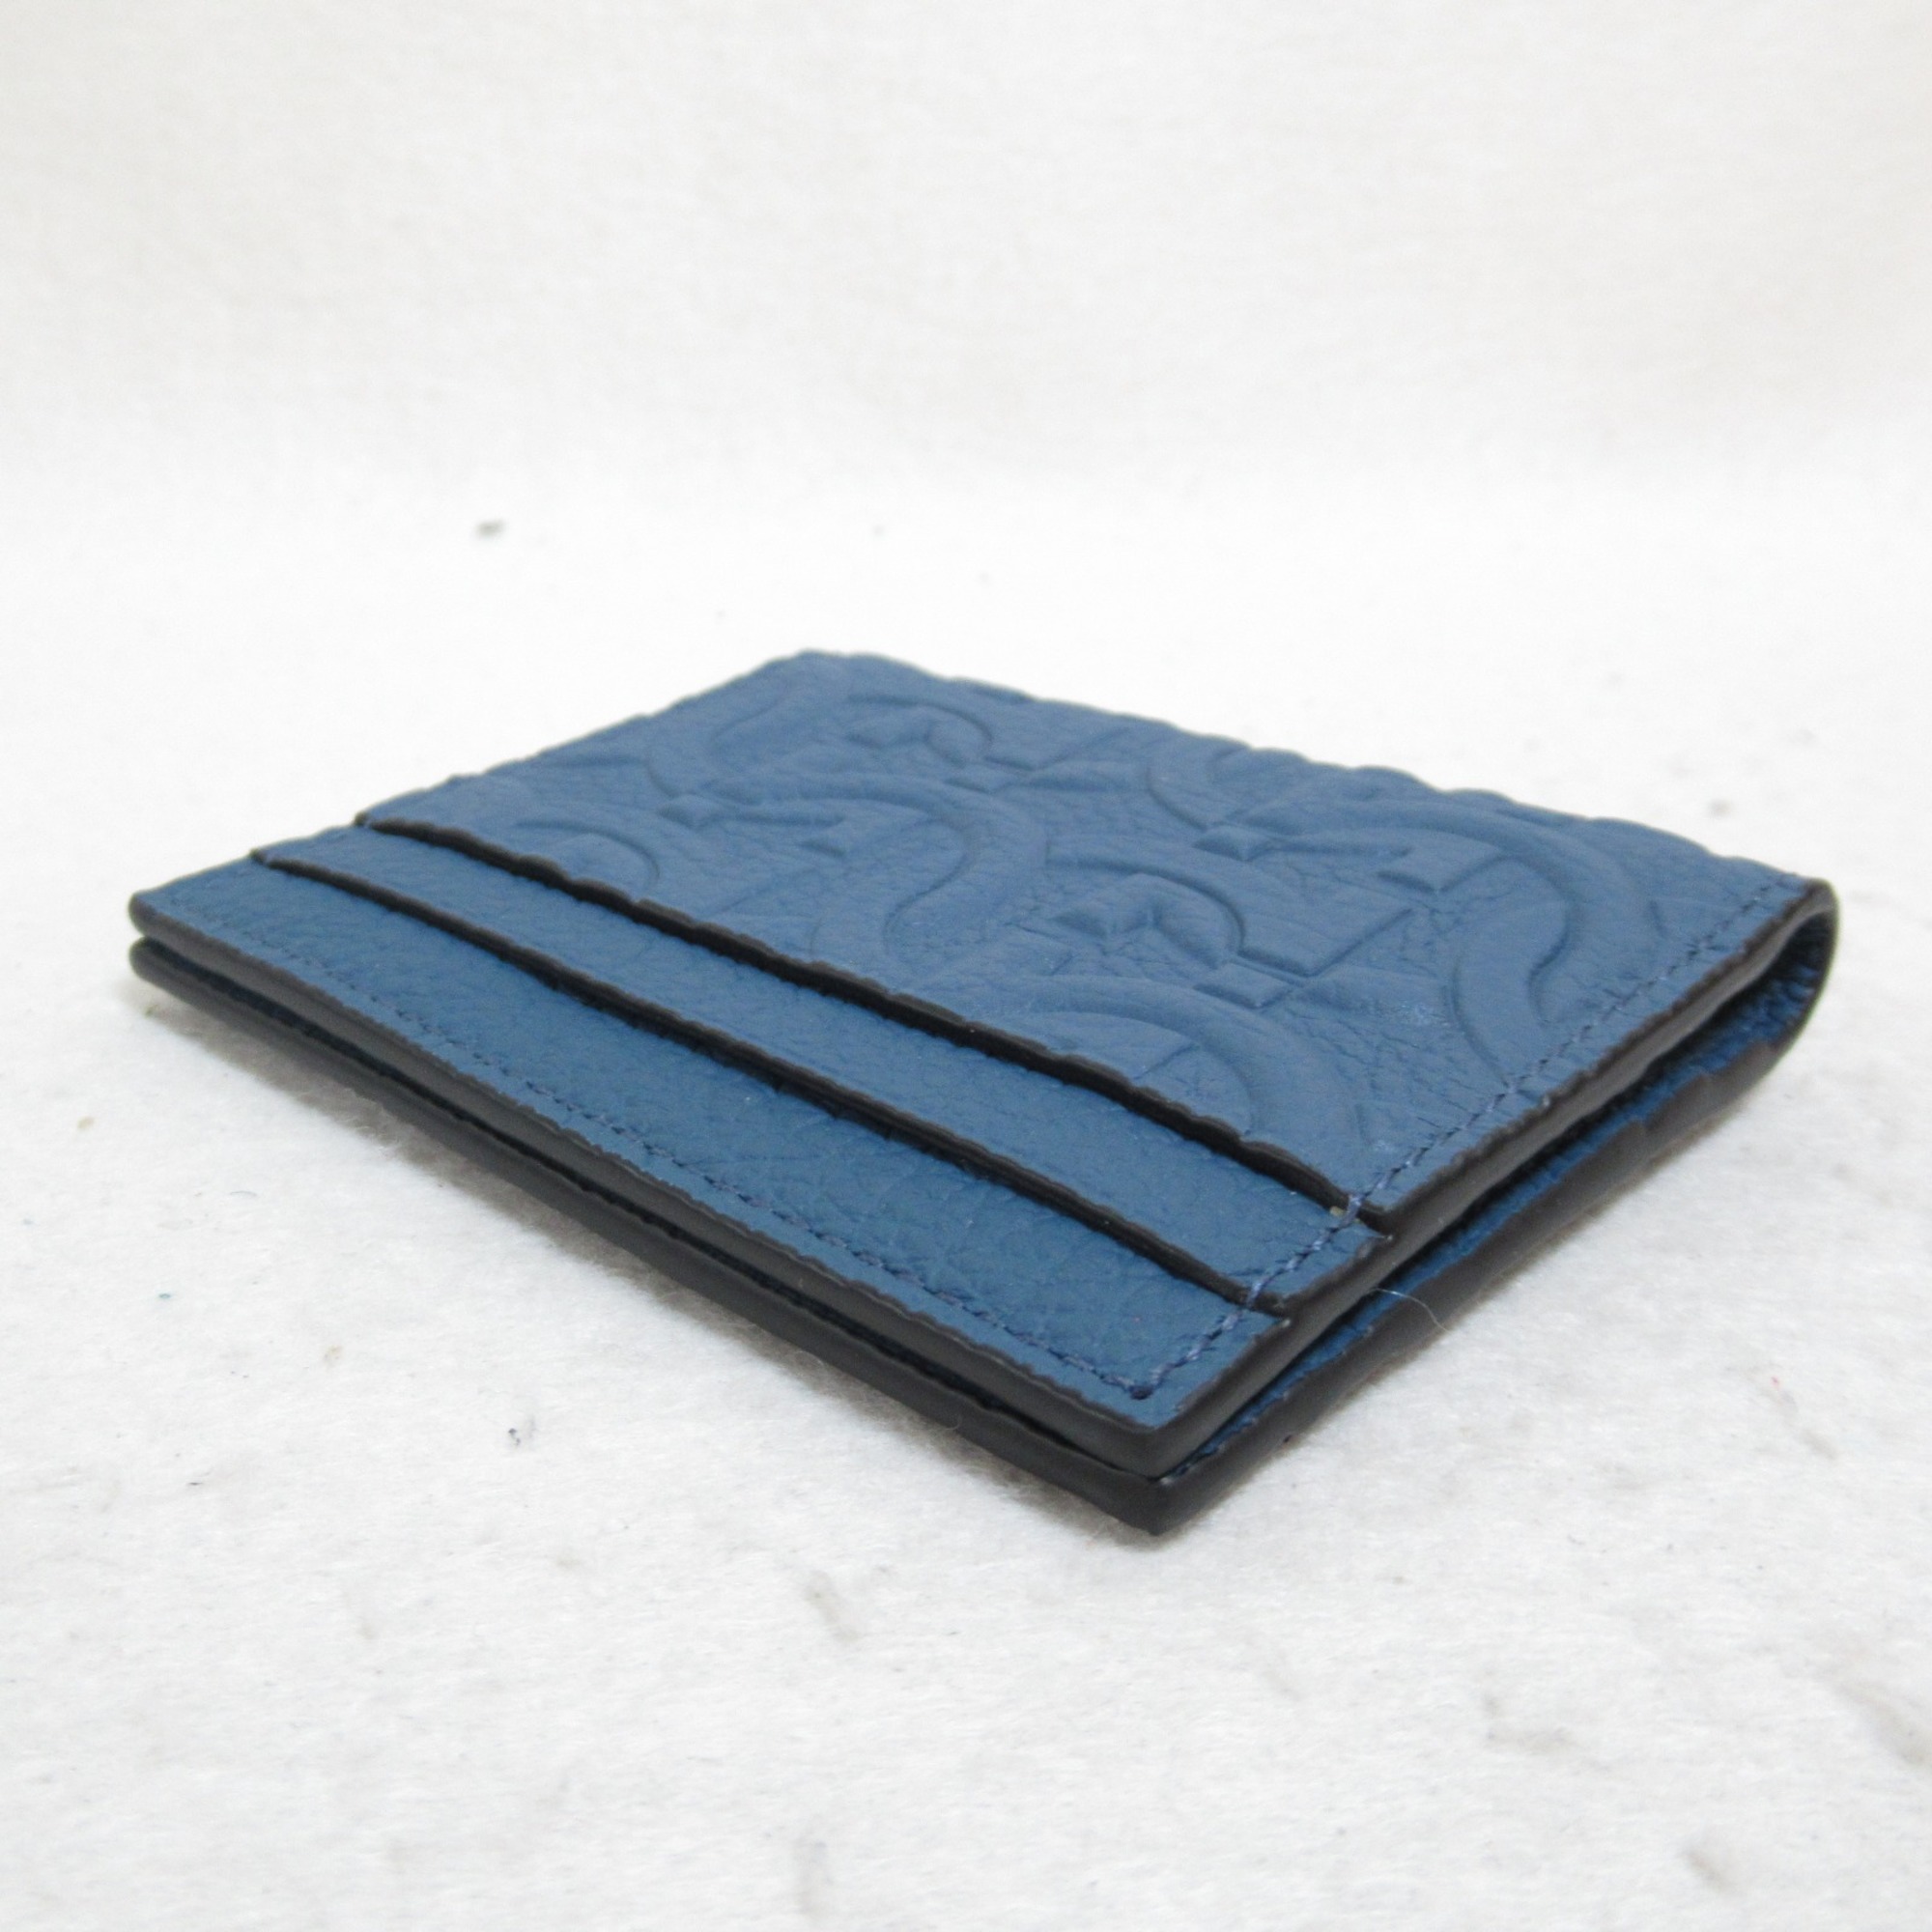 Salvatore Ferragamo Card Case Blue Denim blue leather 661077758016